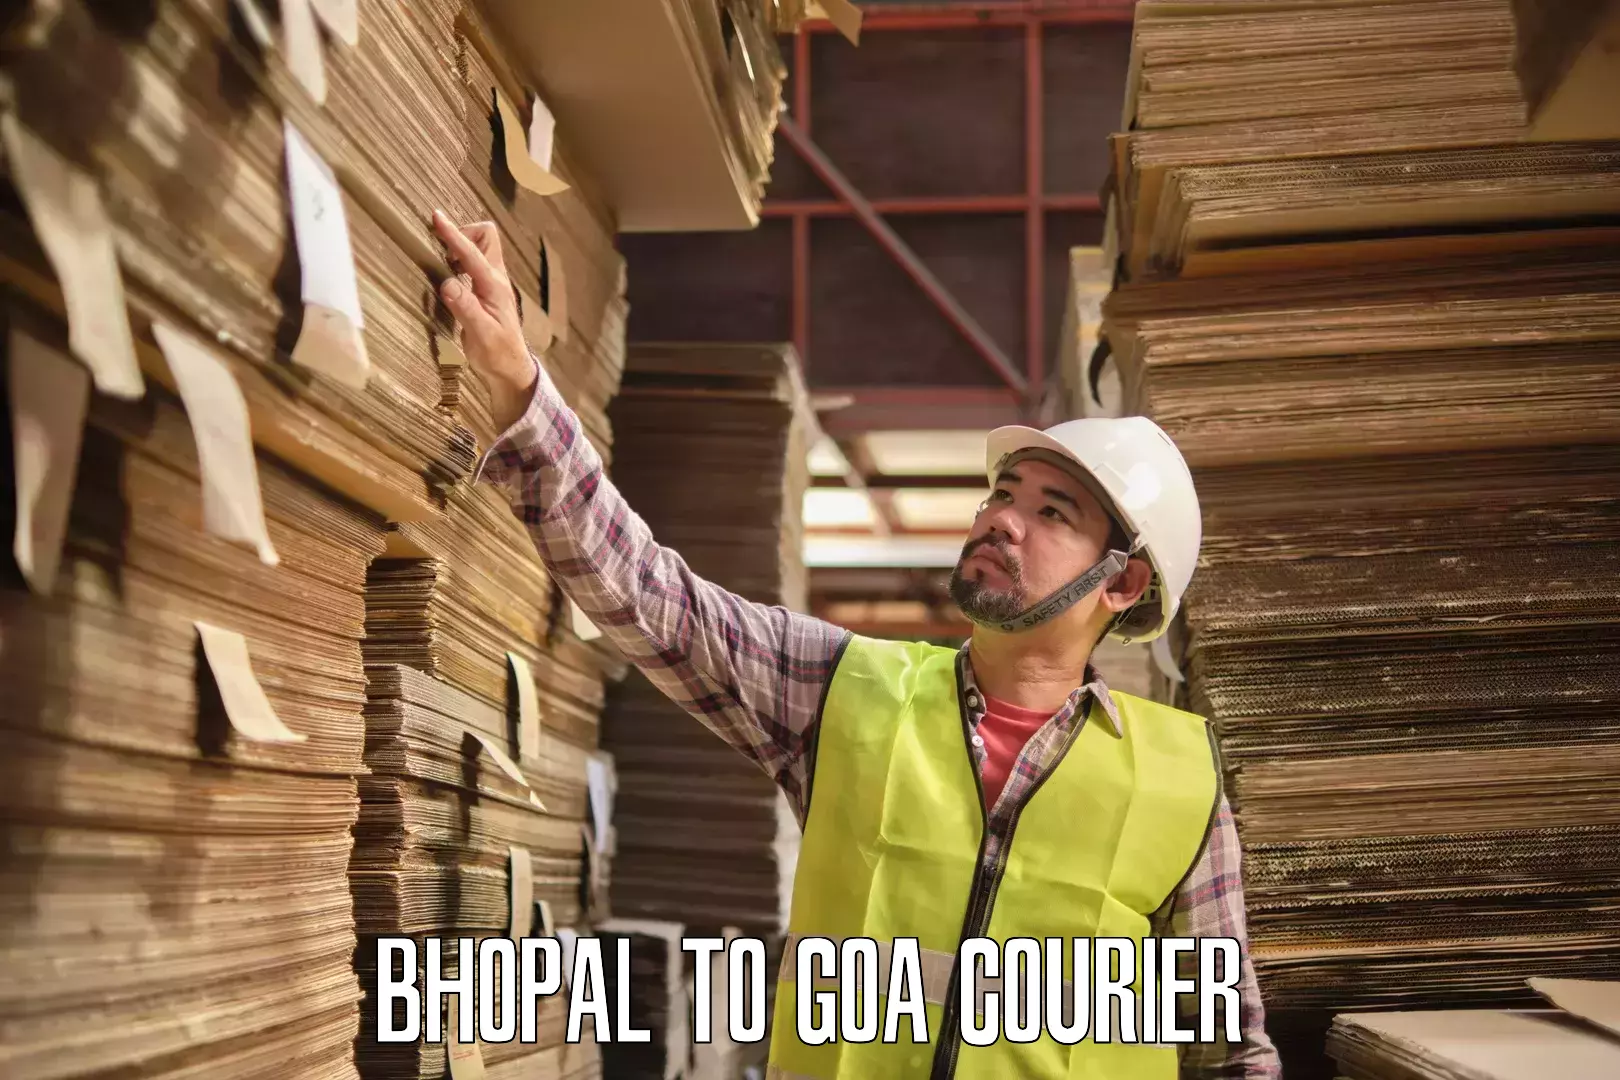 User-friendly courier app Bhopal to Bicholim